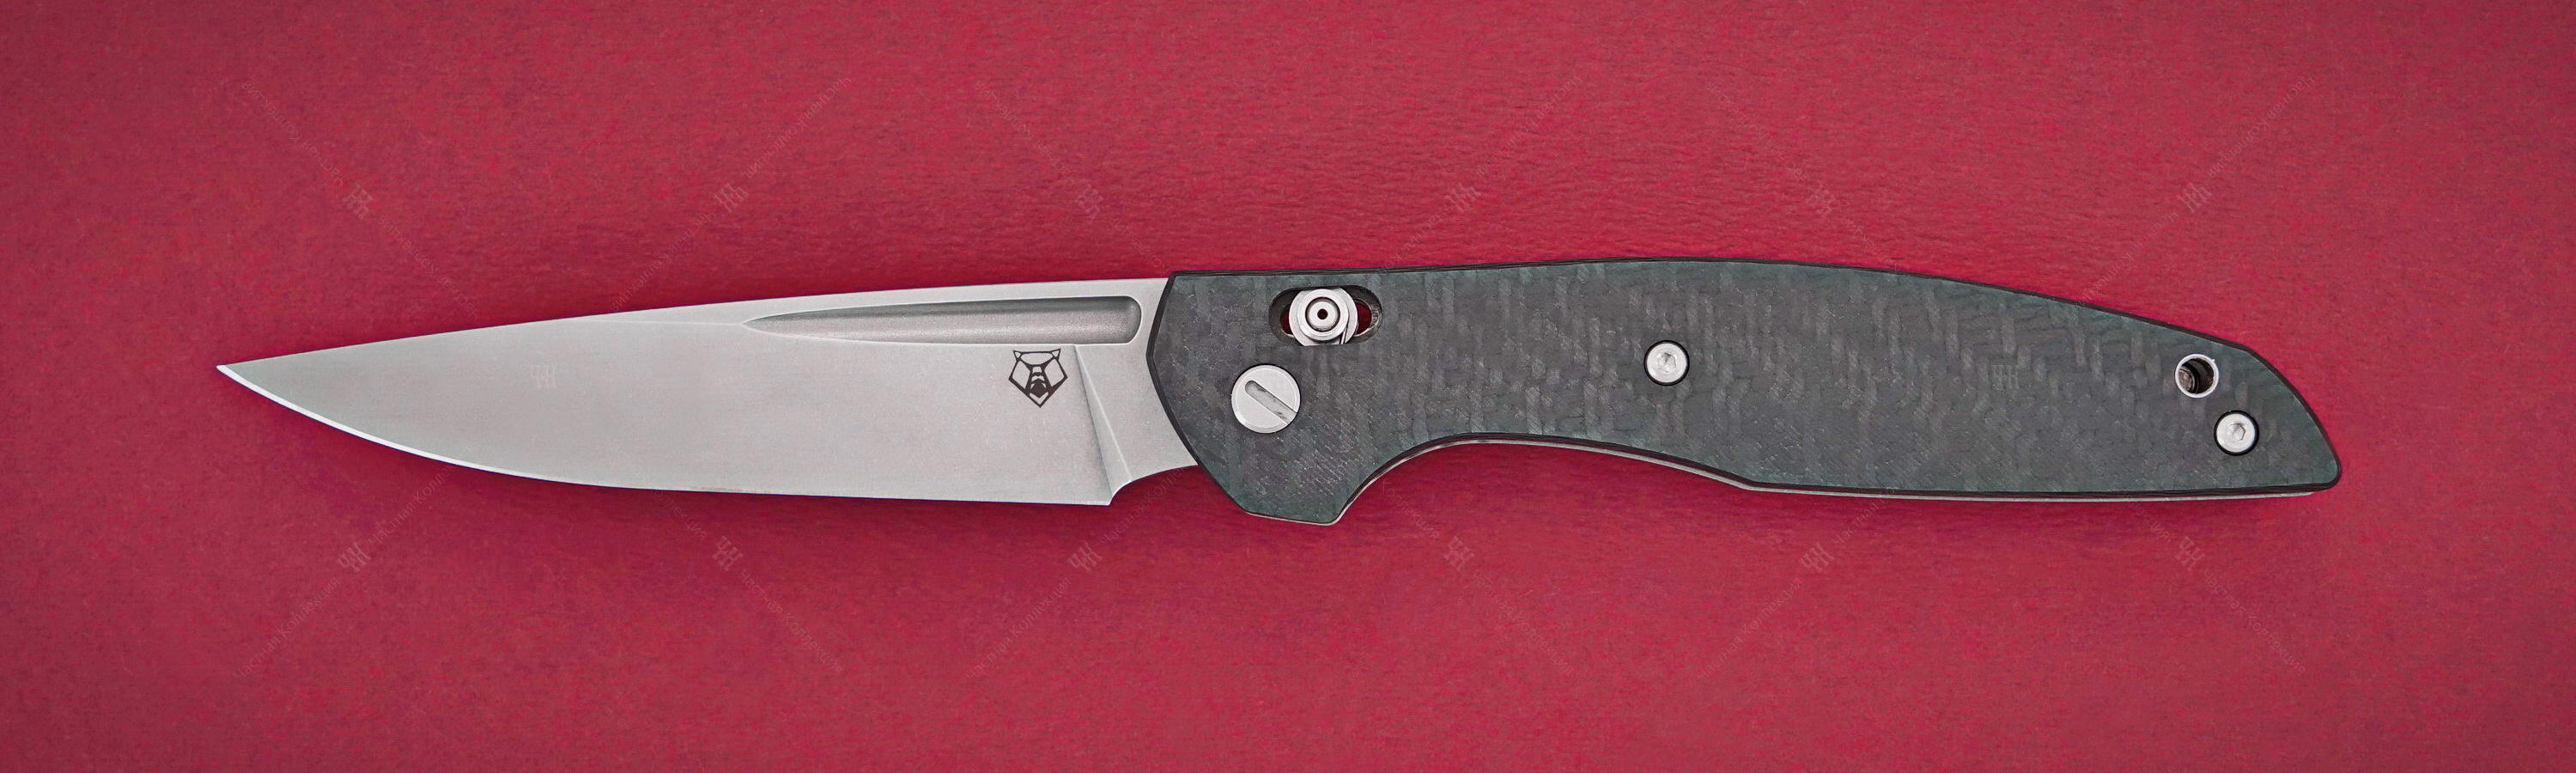 SBW 110 knife